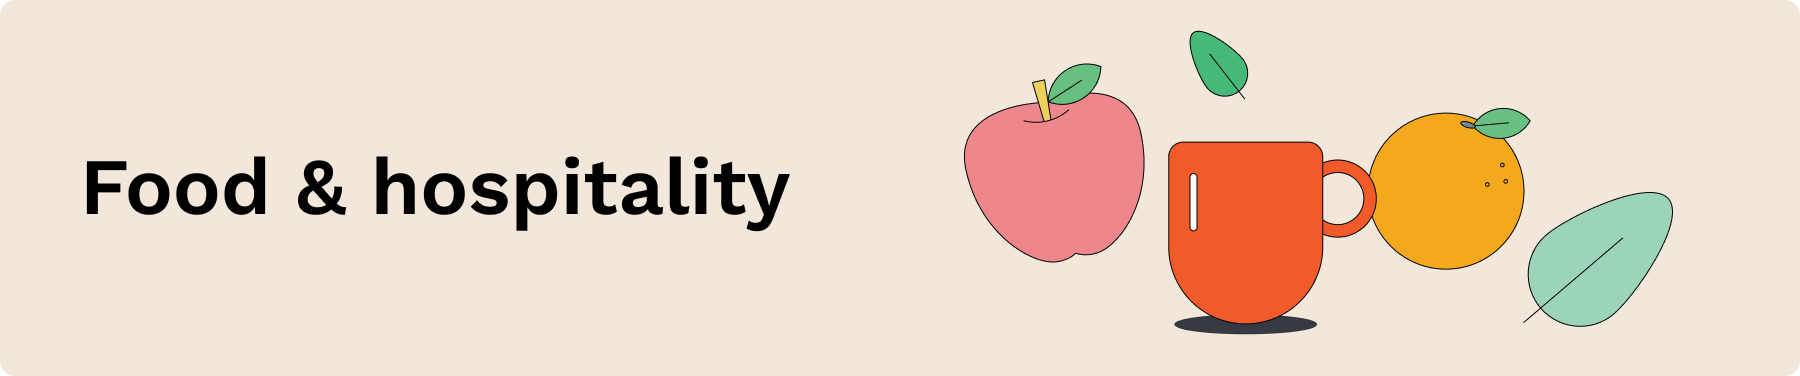 An apple, a mug, an orange, and a leaf represent hospitality.